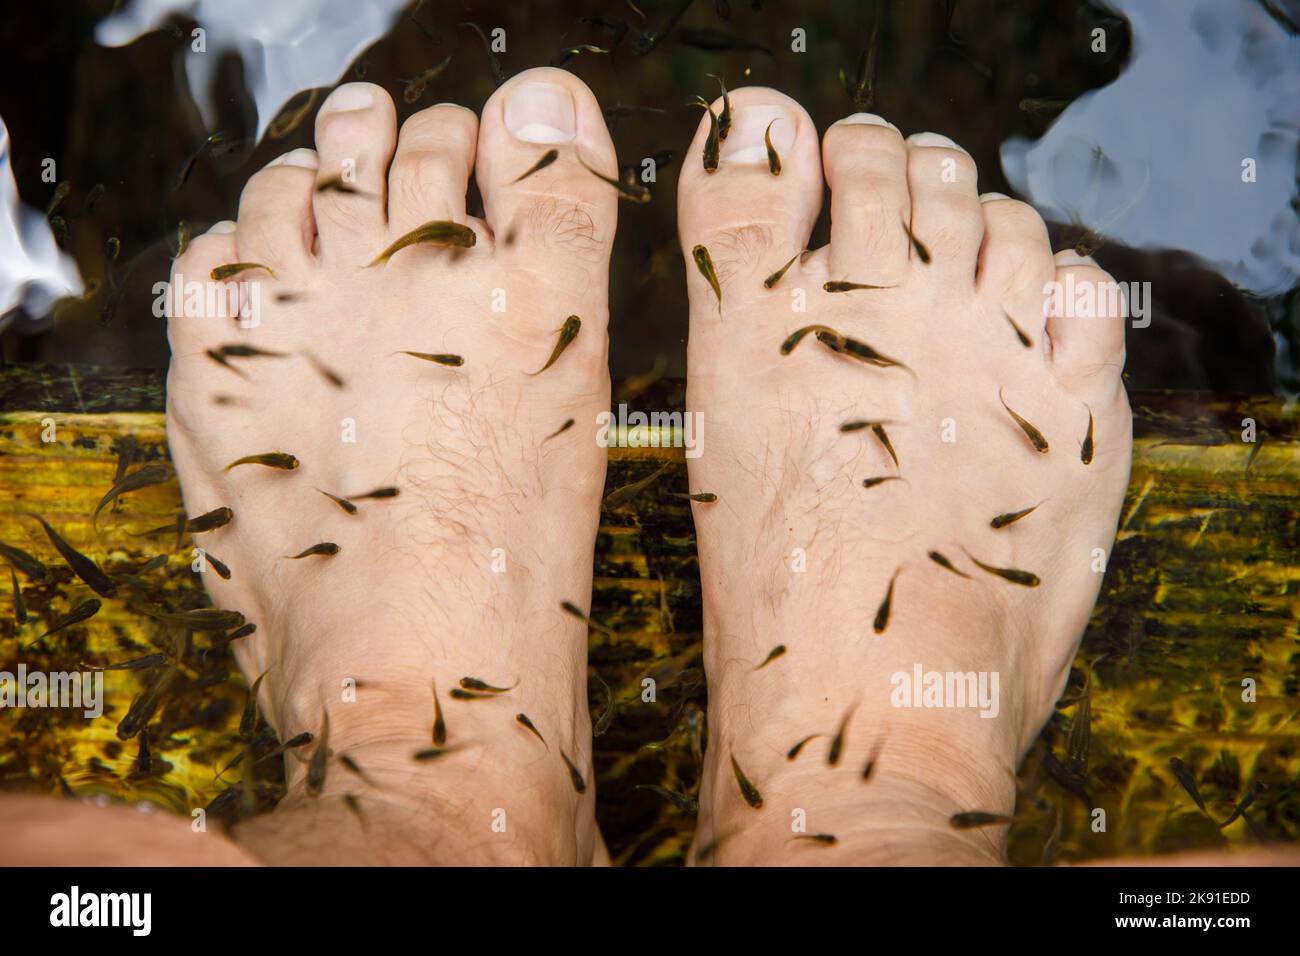 Peeling procedure in the aquarium. Spa treatment with tropical fish. Stock Photo